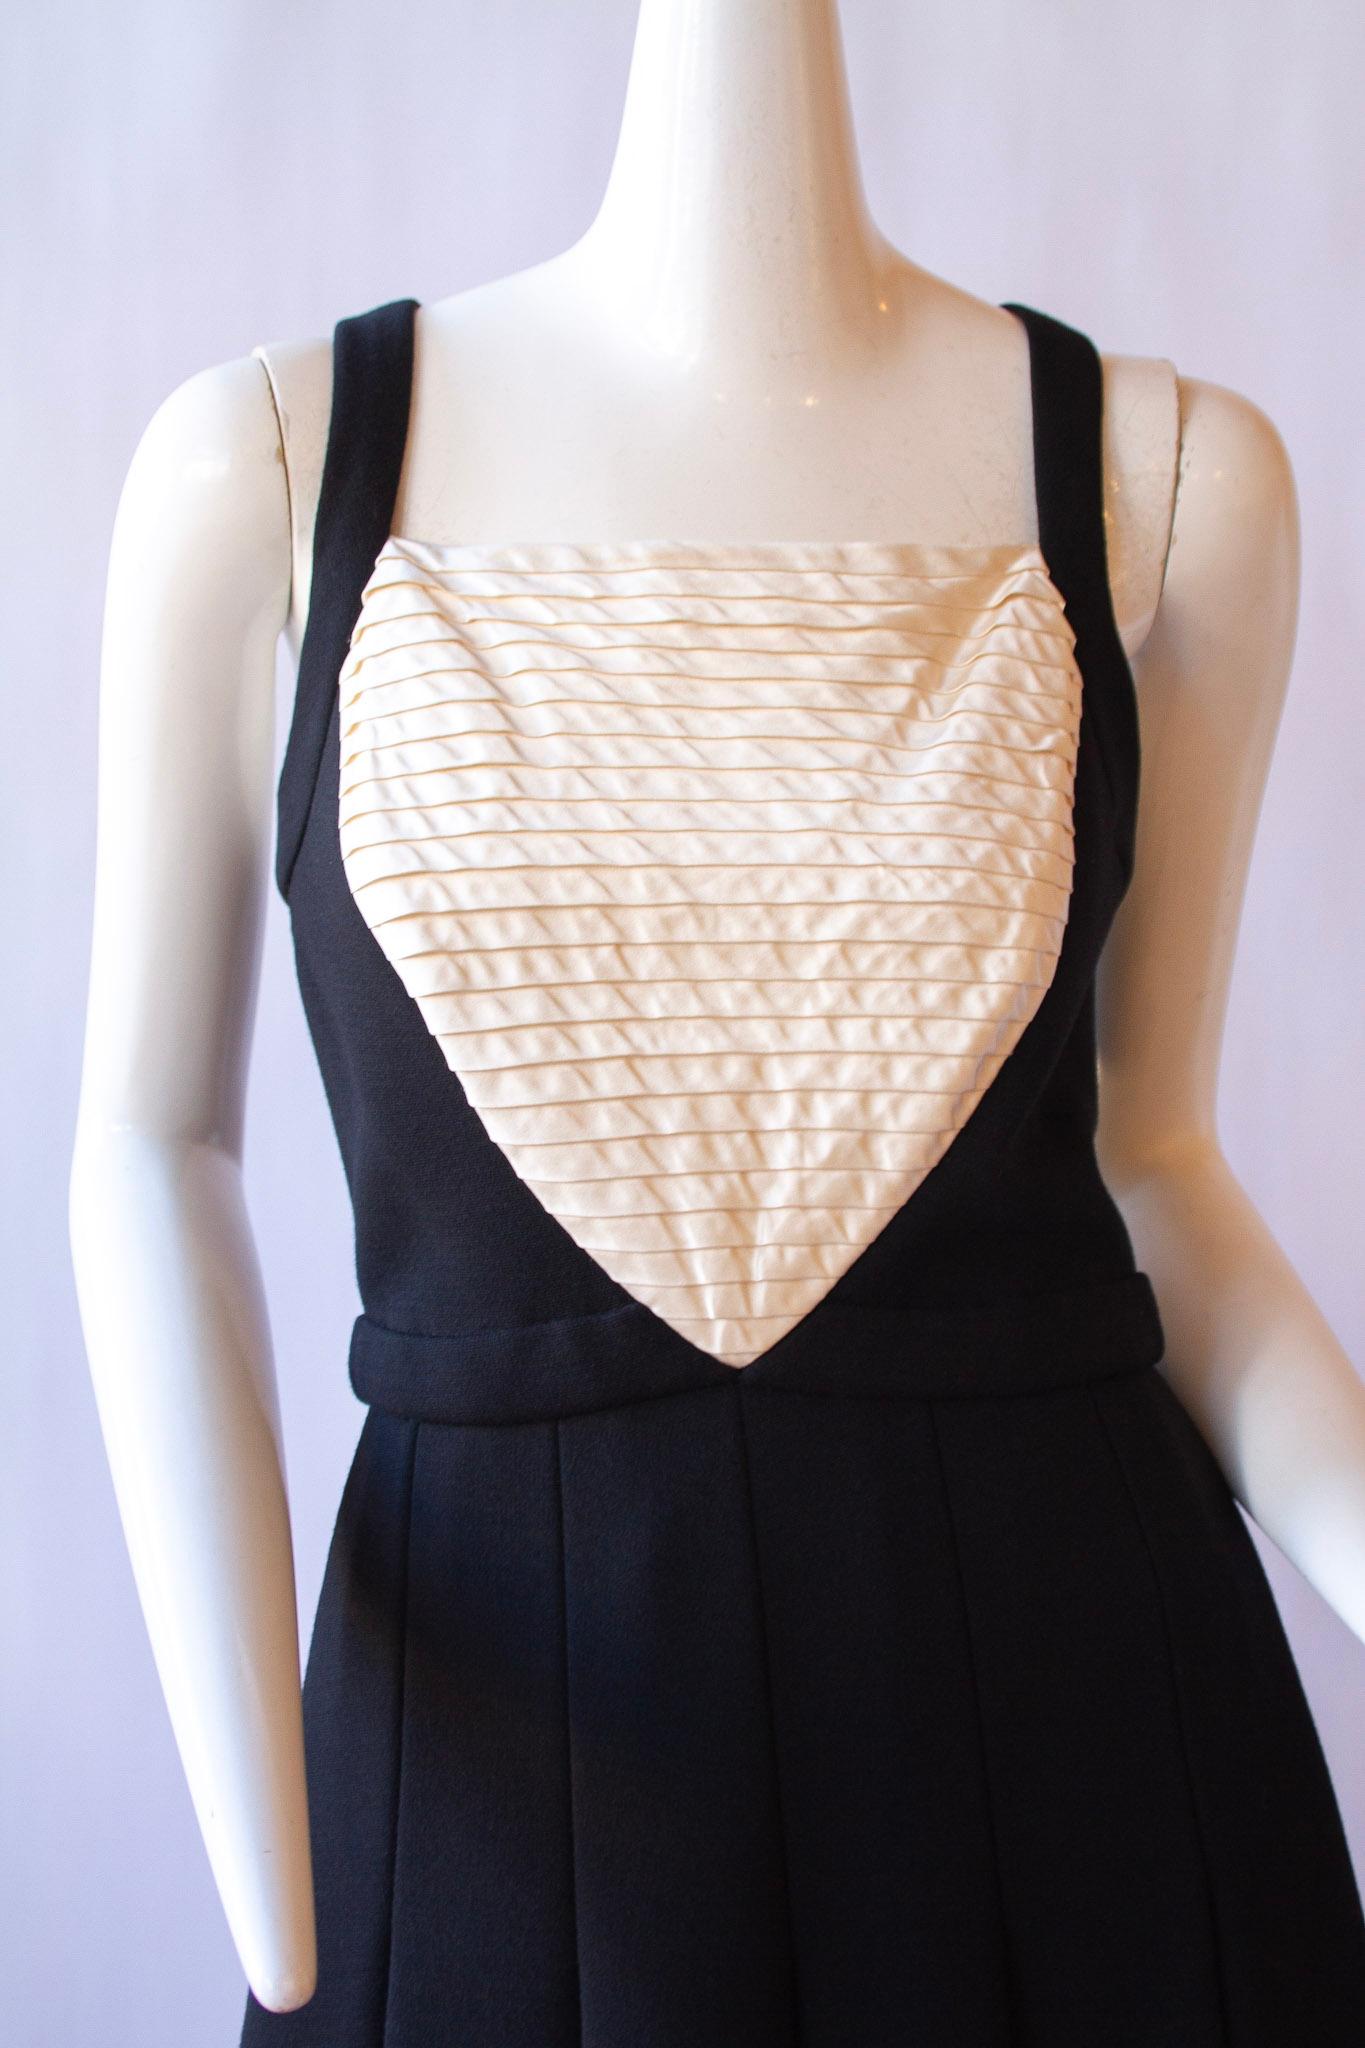 Chanel halter tuxedo dress, pleated chest, back cross-straps, A-line flounce skirt. Wool

Sz 6/Med